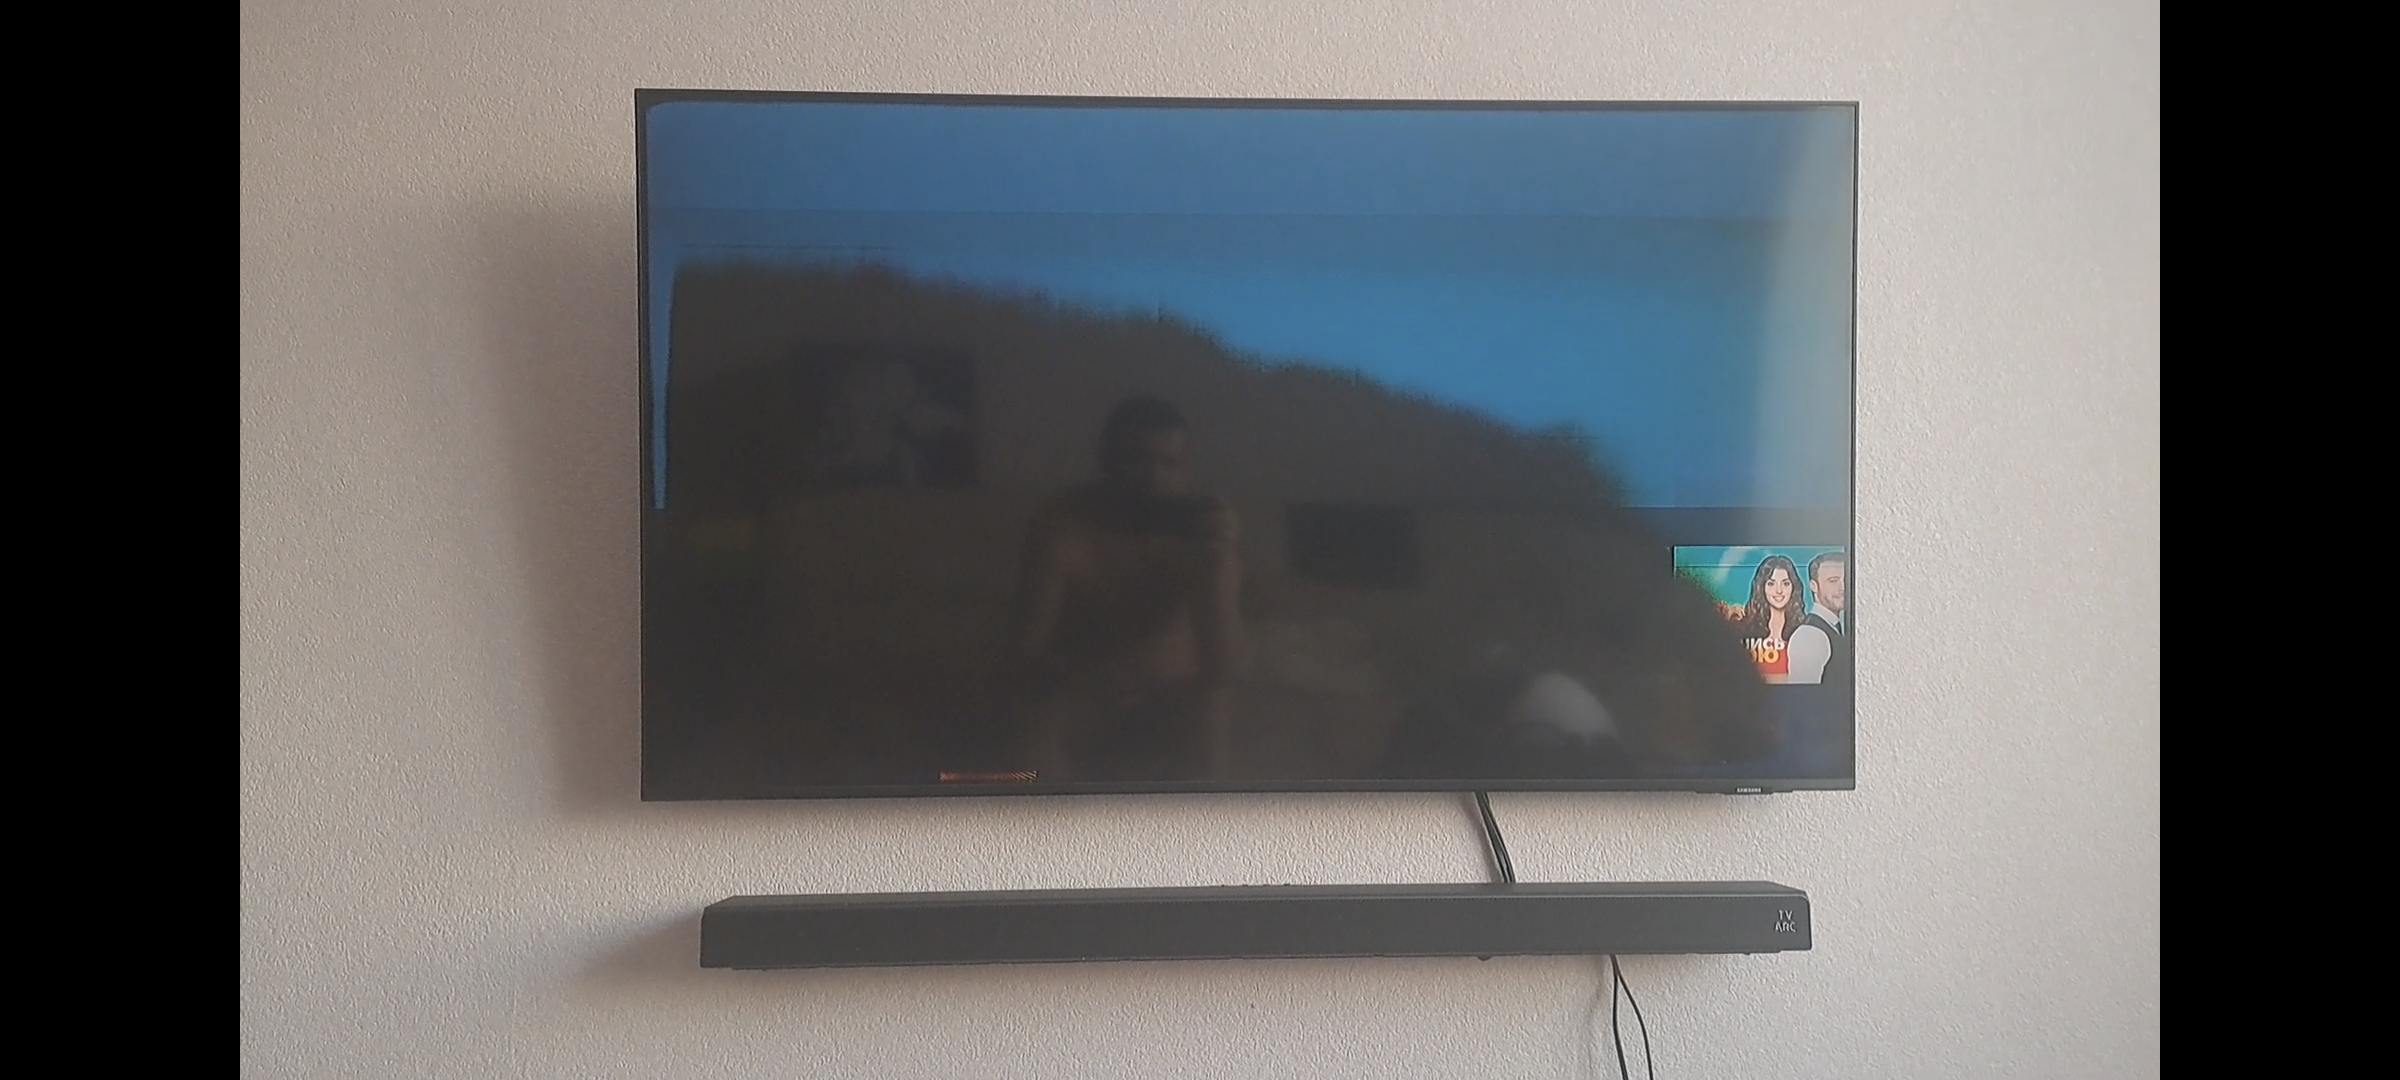 Самсунг телевизоры потемнел экран. Потемнел экран телевизора. Половина телевизора потемнела. Темнеет экран. Монитор чернеет.